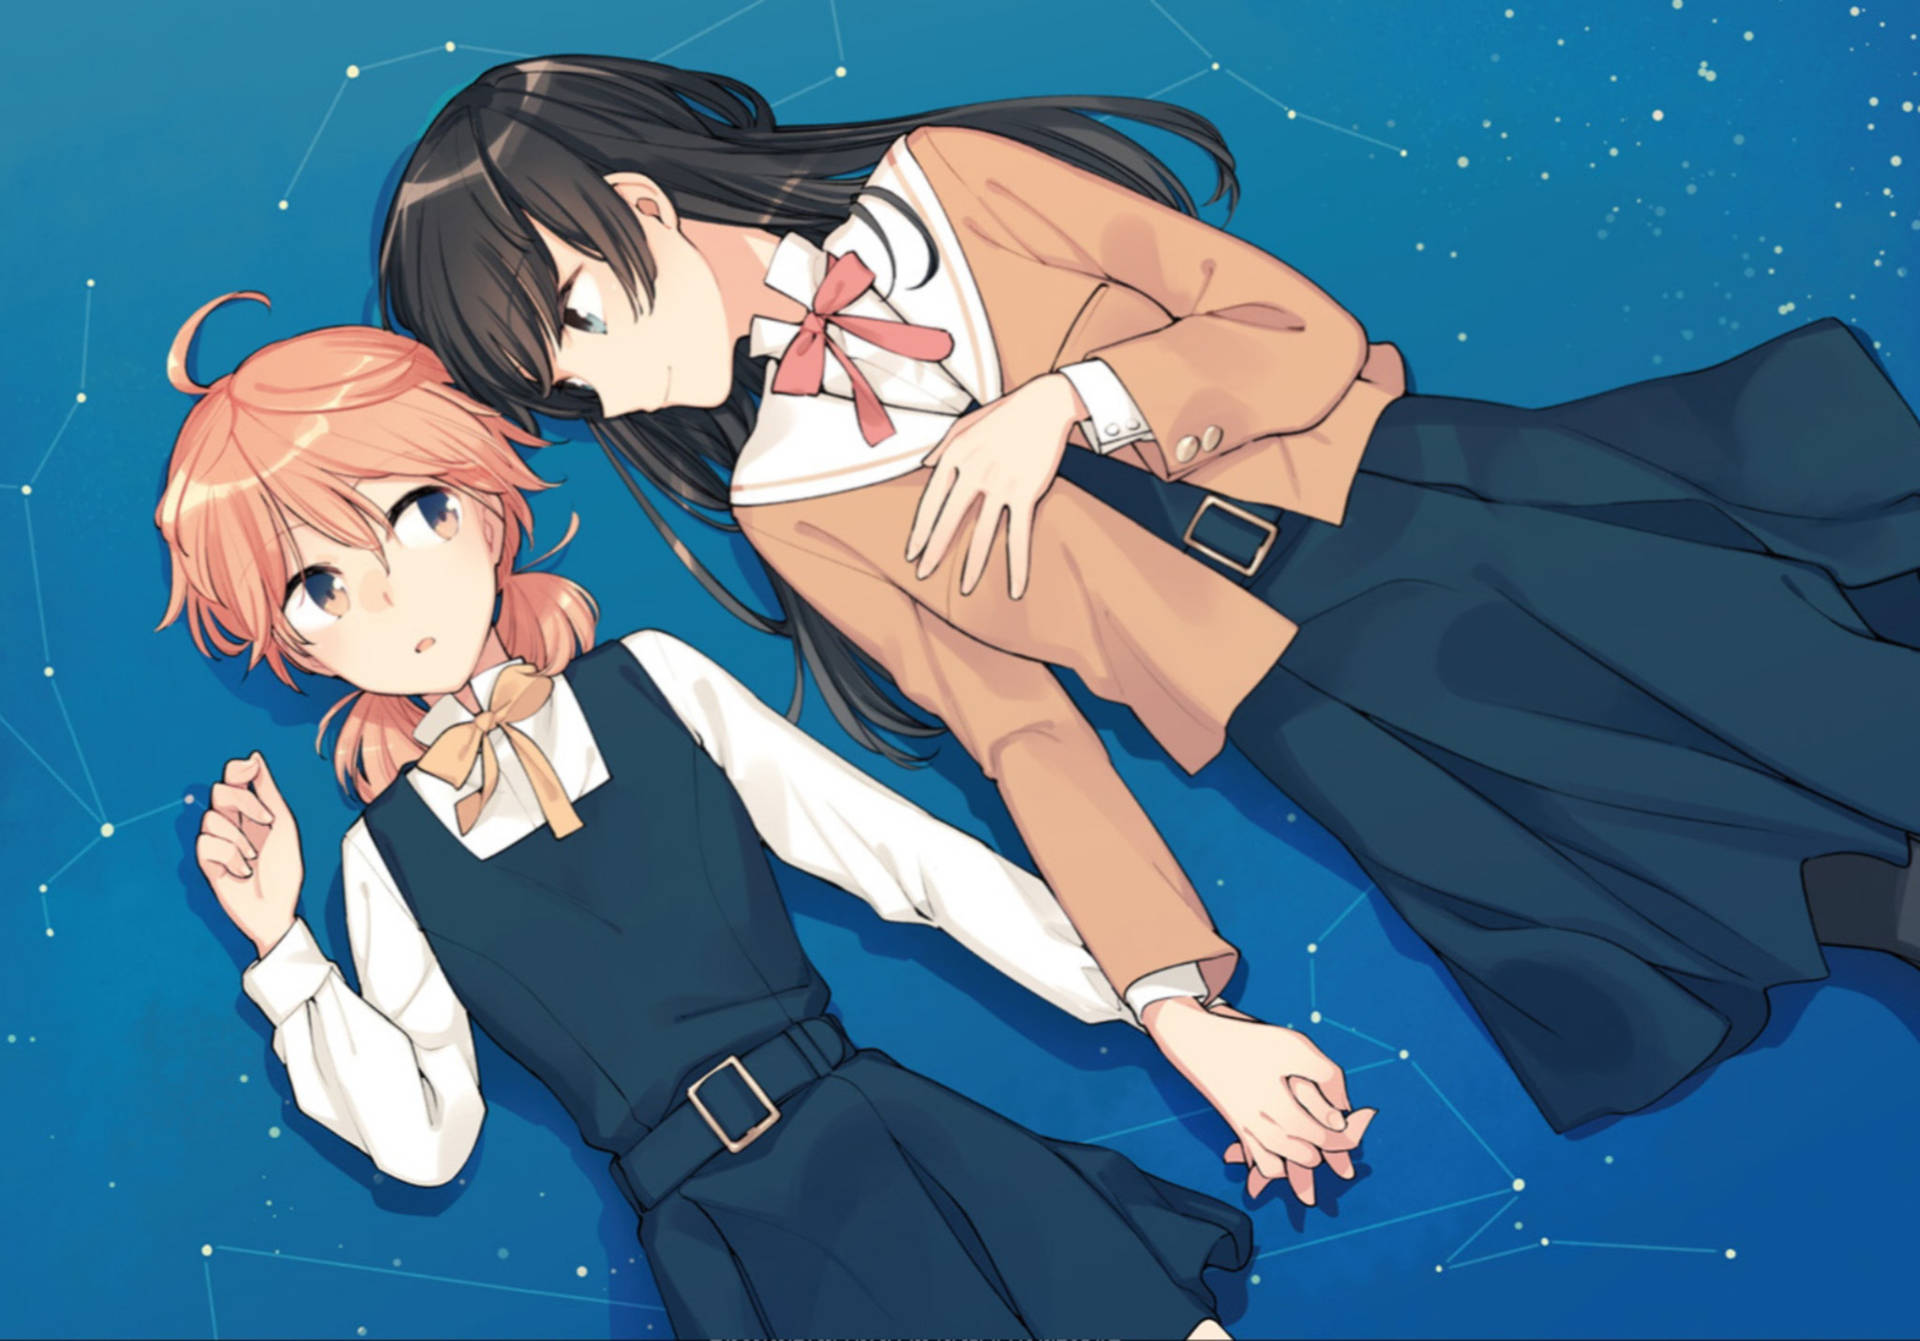 Free Anime Lesbian Wallpaper Downloads, [100+] Anime Lesbian Wallpapers for  FREE 